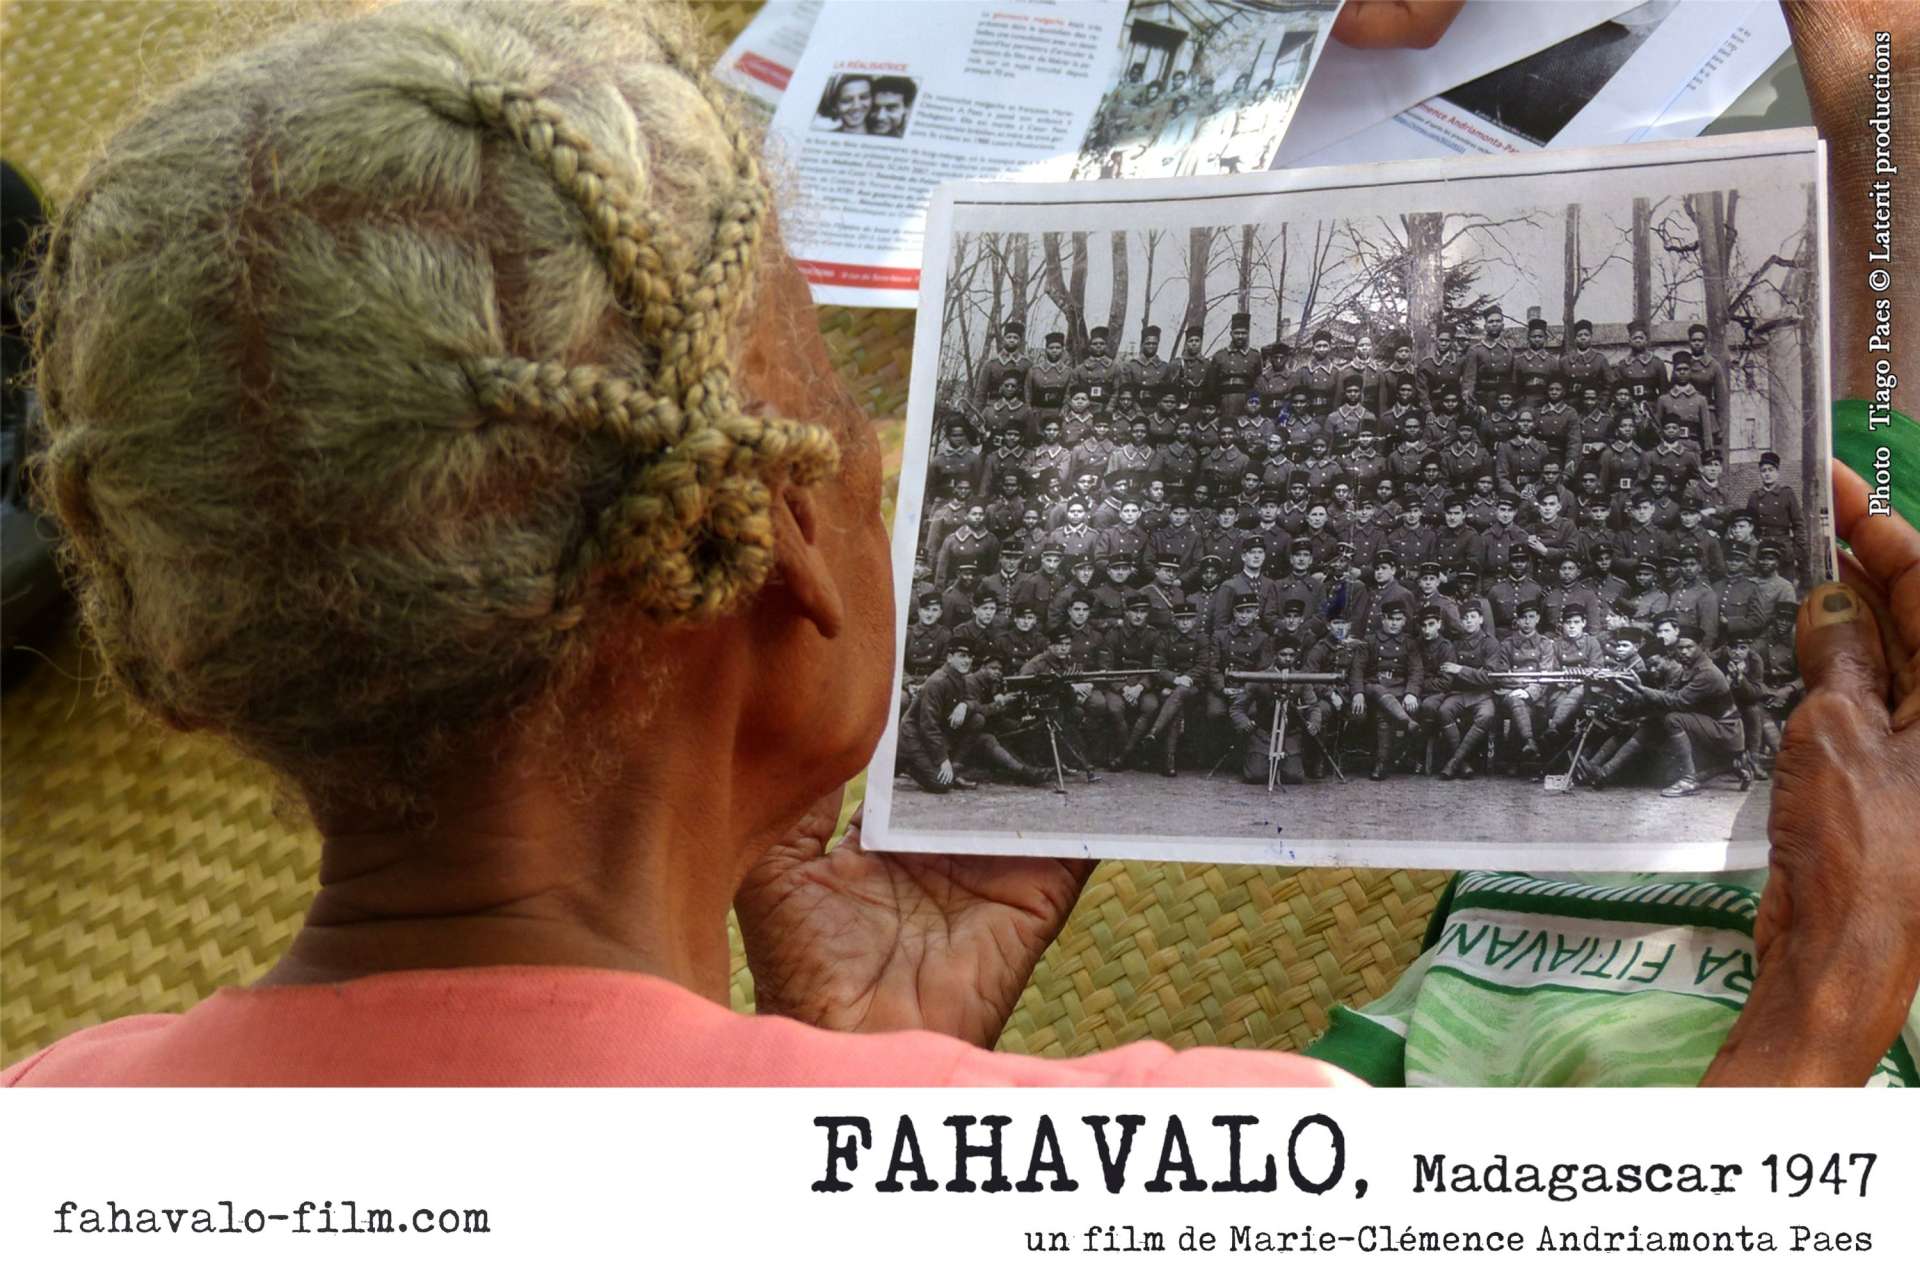 Fahavalo, Madagascar 1947